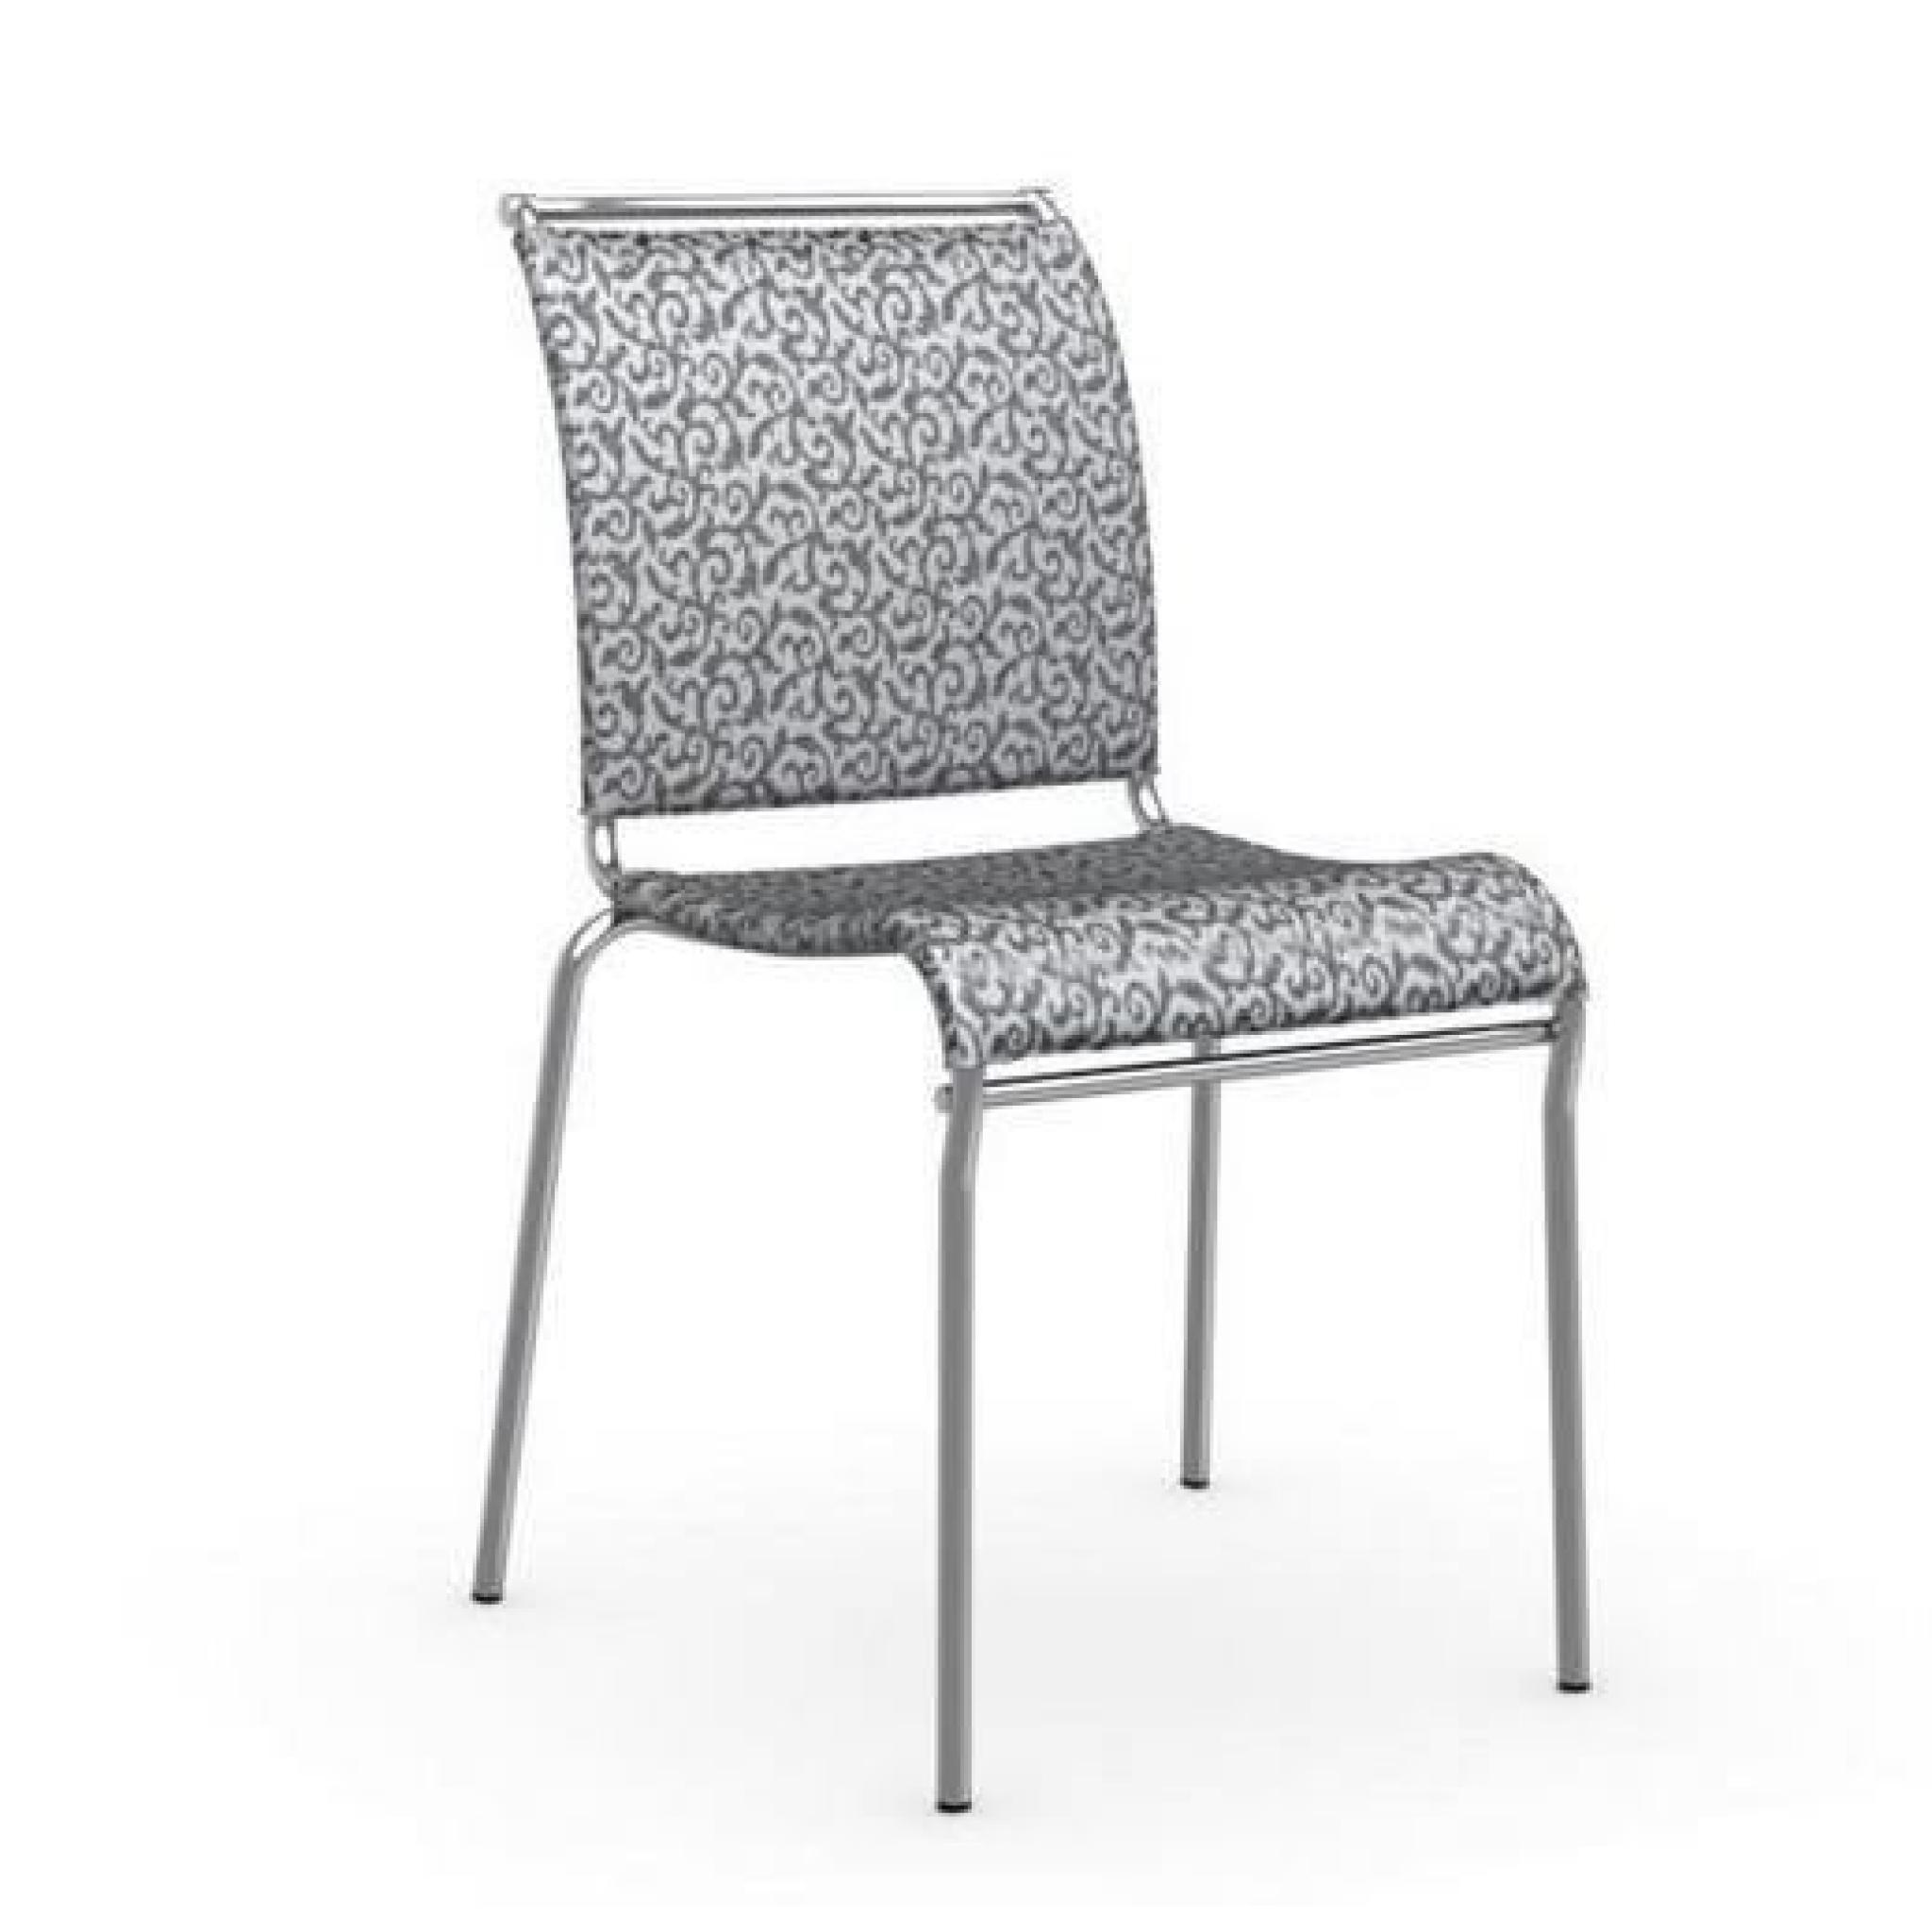 Chaise italienne AIR en tissu arabesque coloris gris de CALLIGARIS